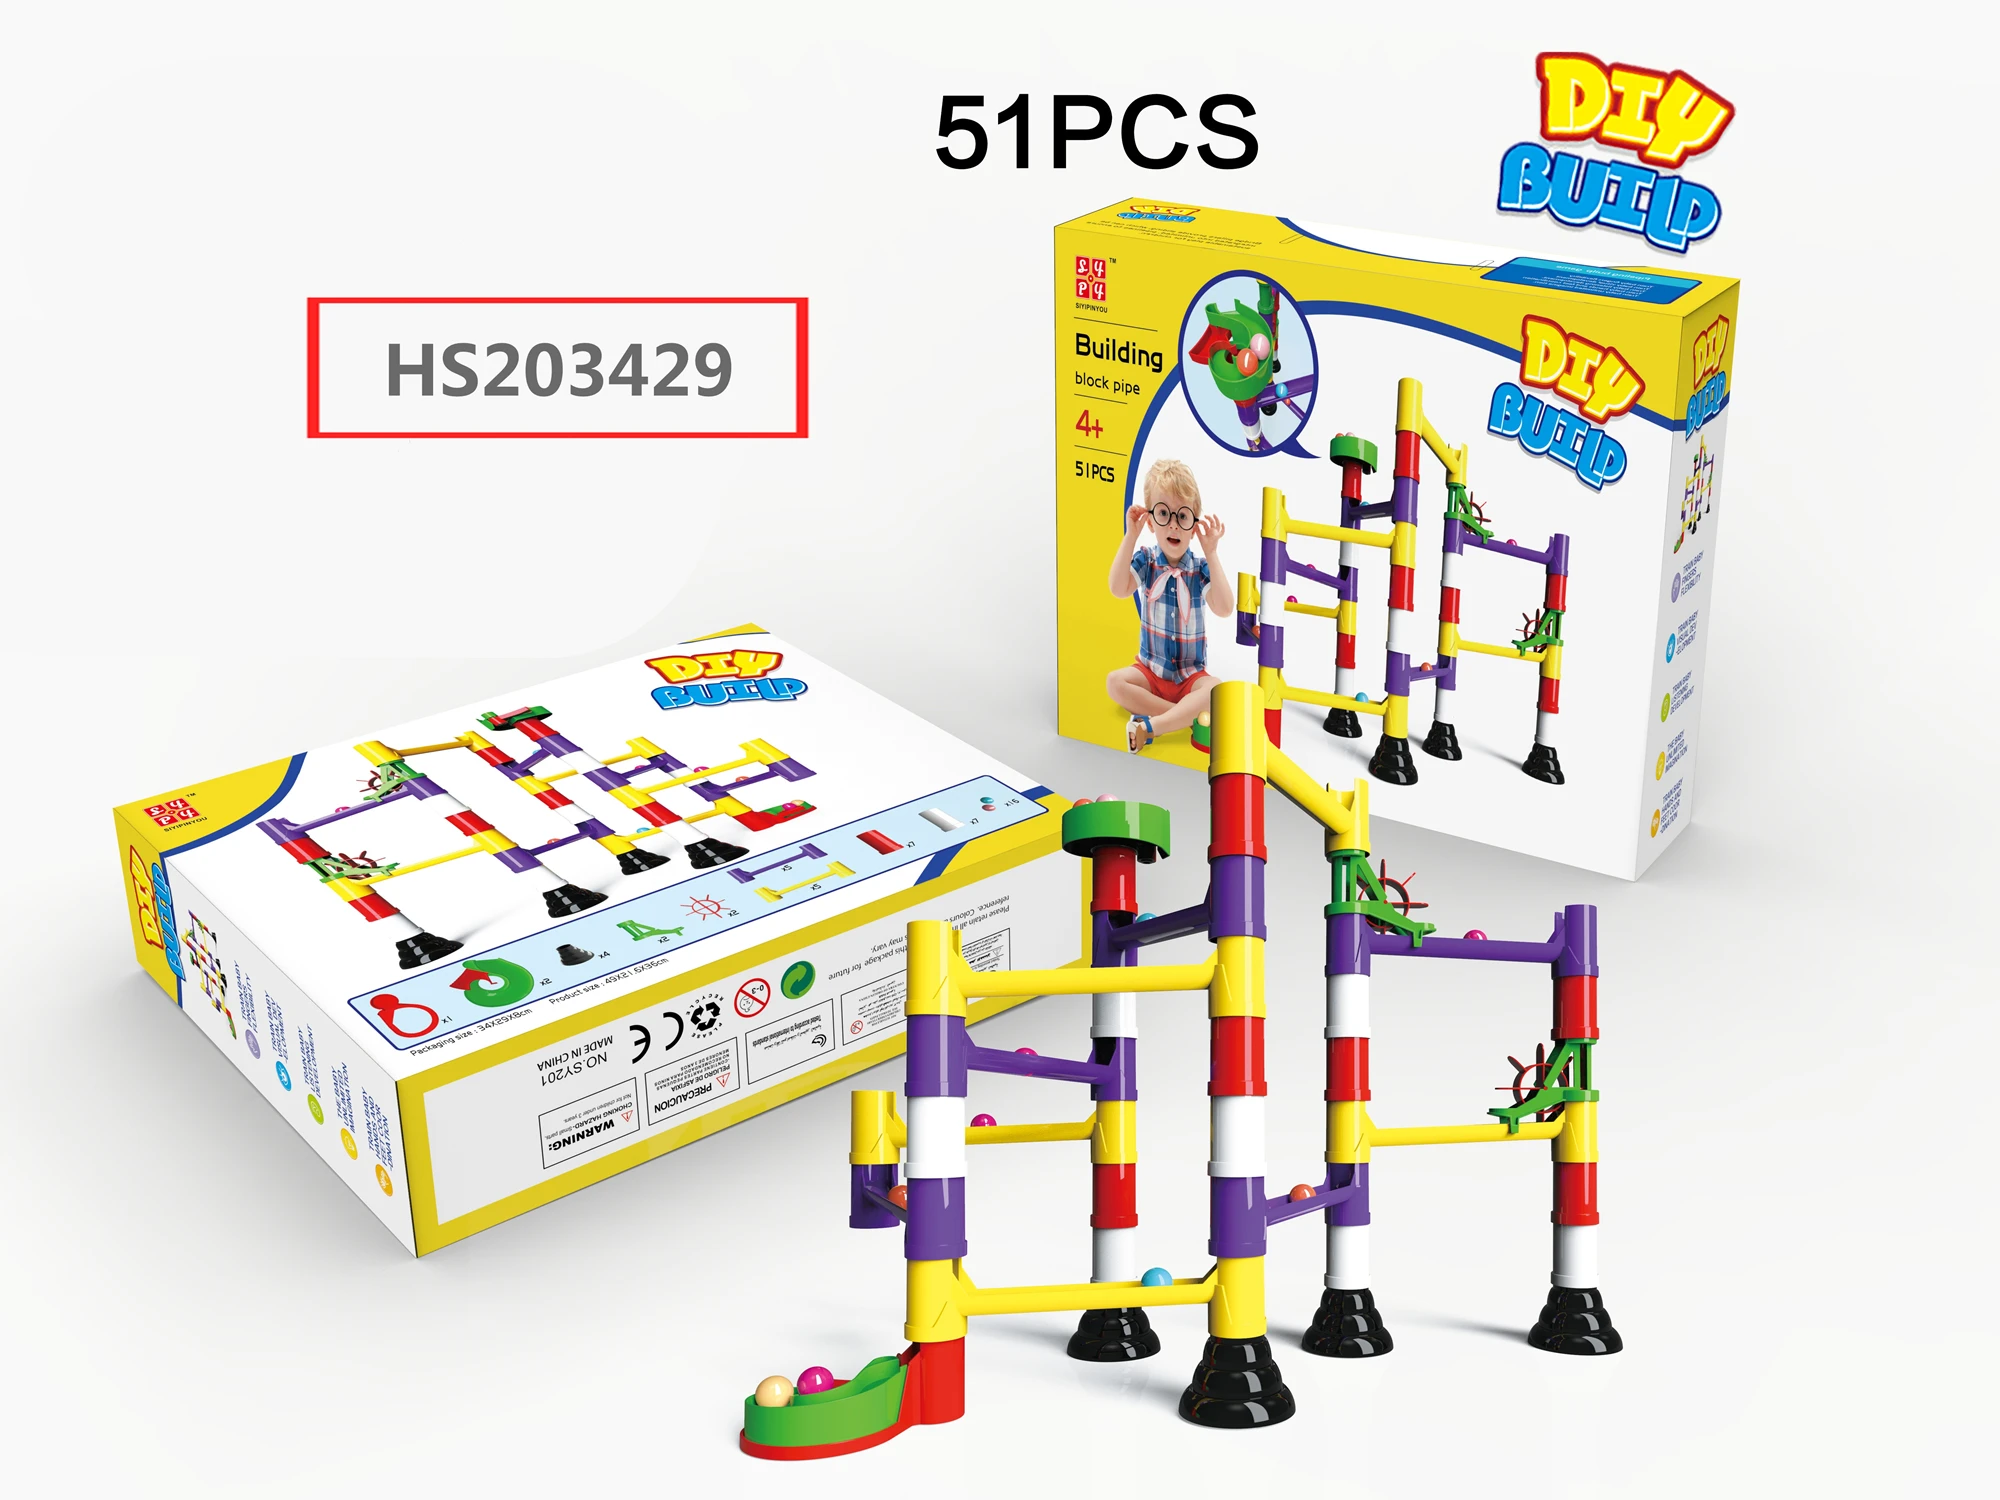 HS203429, Huwsin Toys, Educational toy, Building block,51pcs